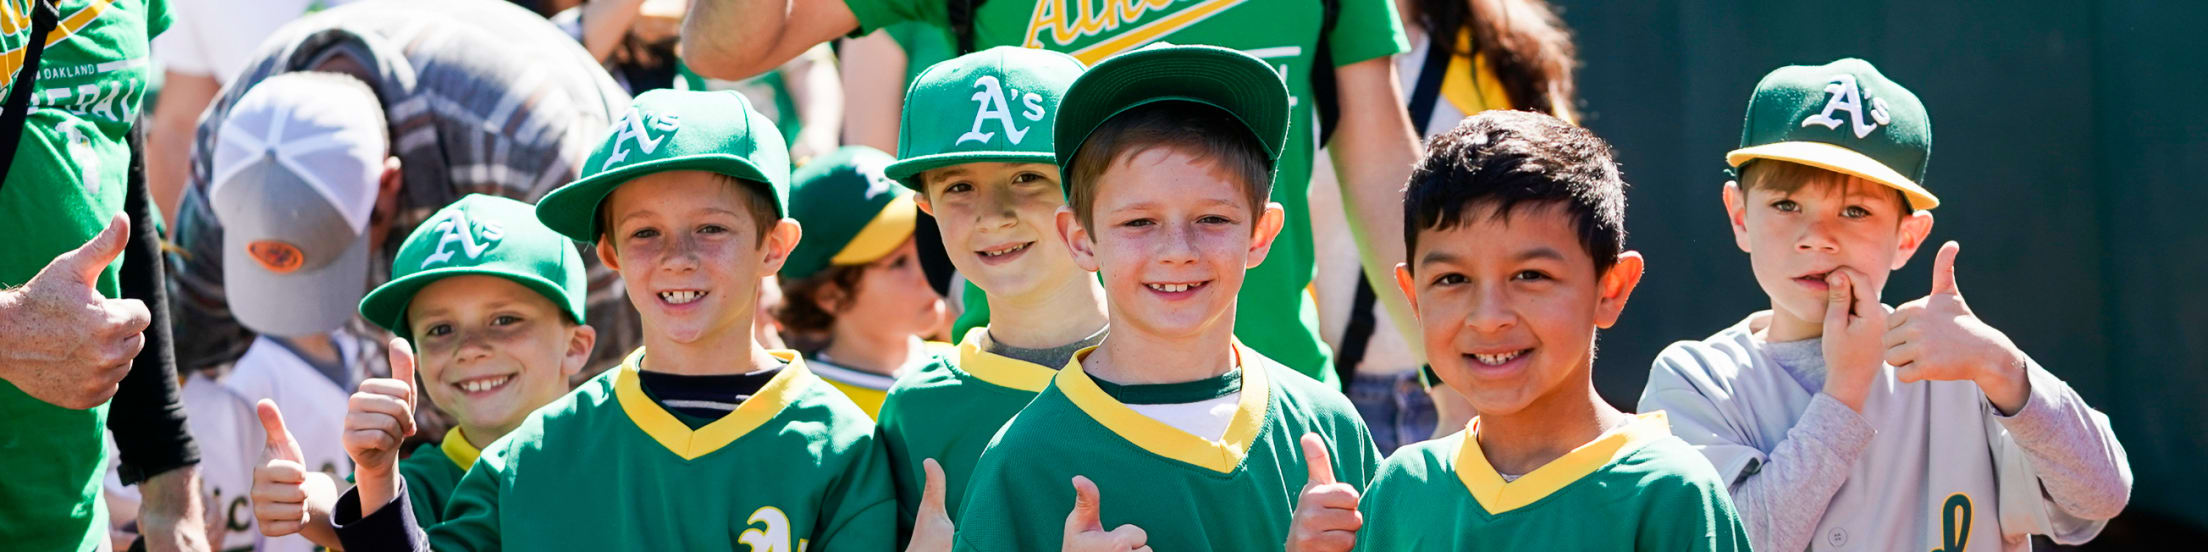 Oakland Athletics Kids in Oakland Athletics Team Shop 